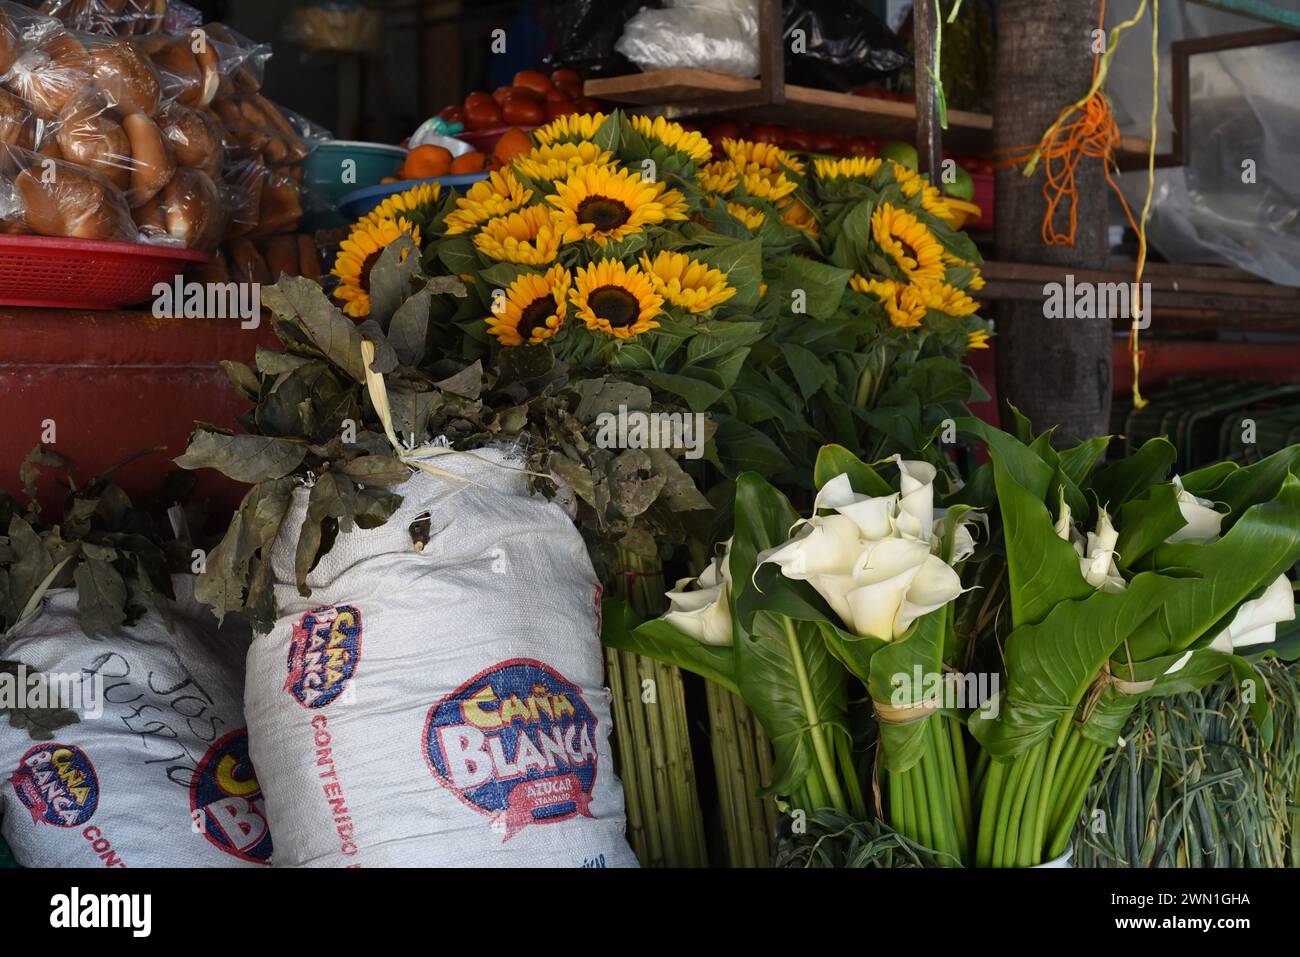 Flowers for sale in the Mercado Benito Juarez market in Puerto Escondido, Oaxaca, Mexico Stock Photo